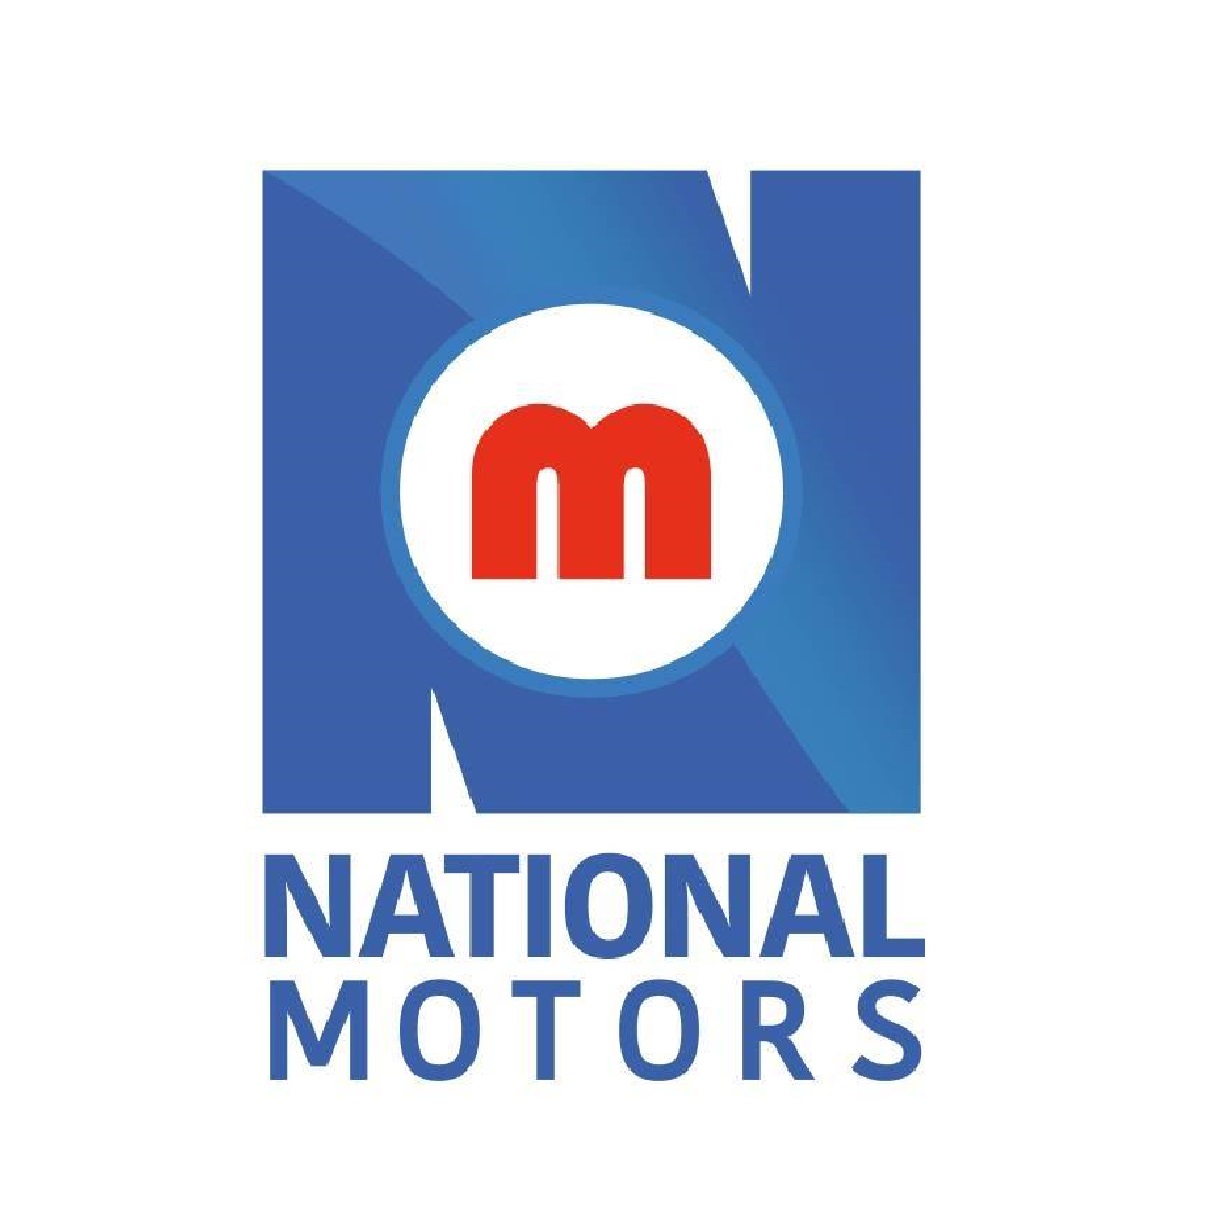 National Motors company